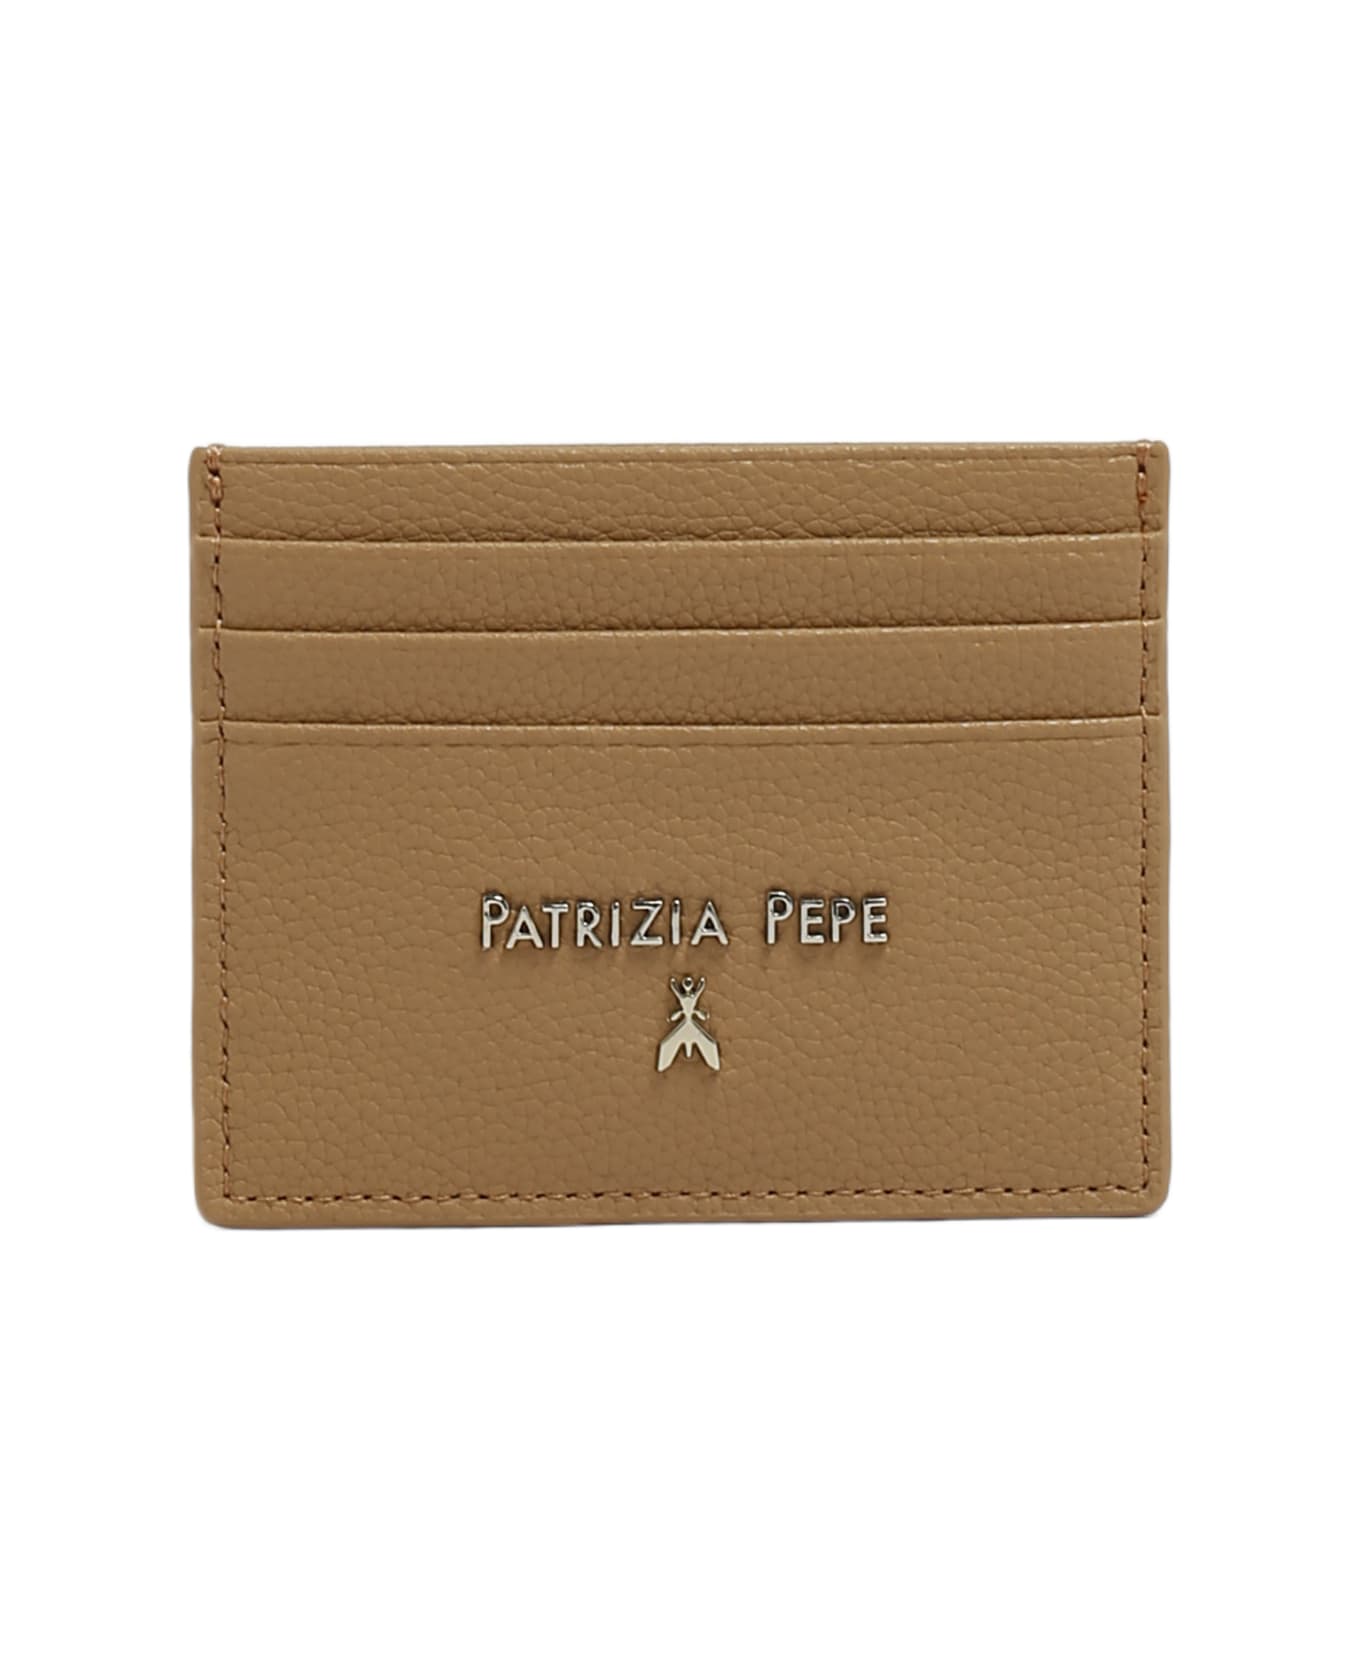 Patrizia Pepe Leather Wallet - NUDE